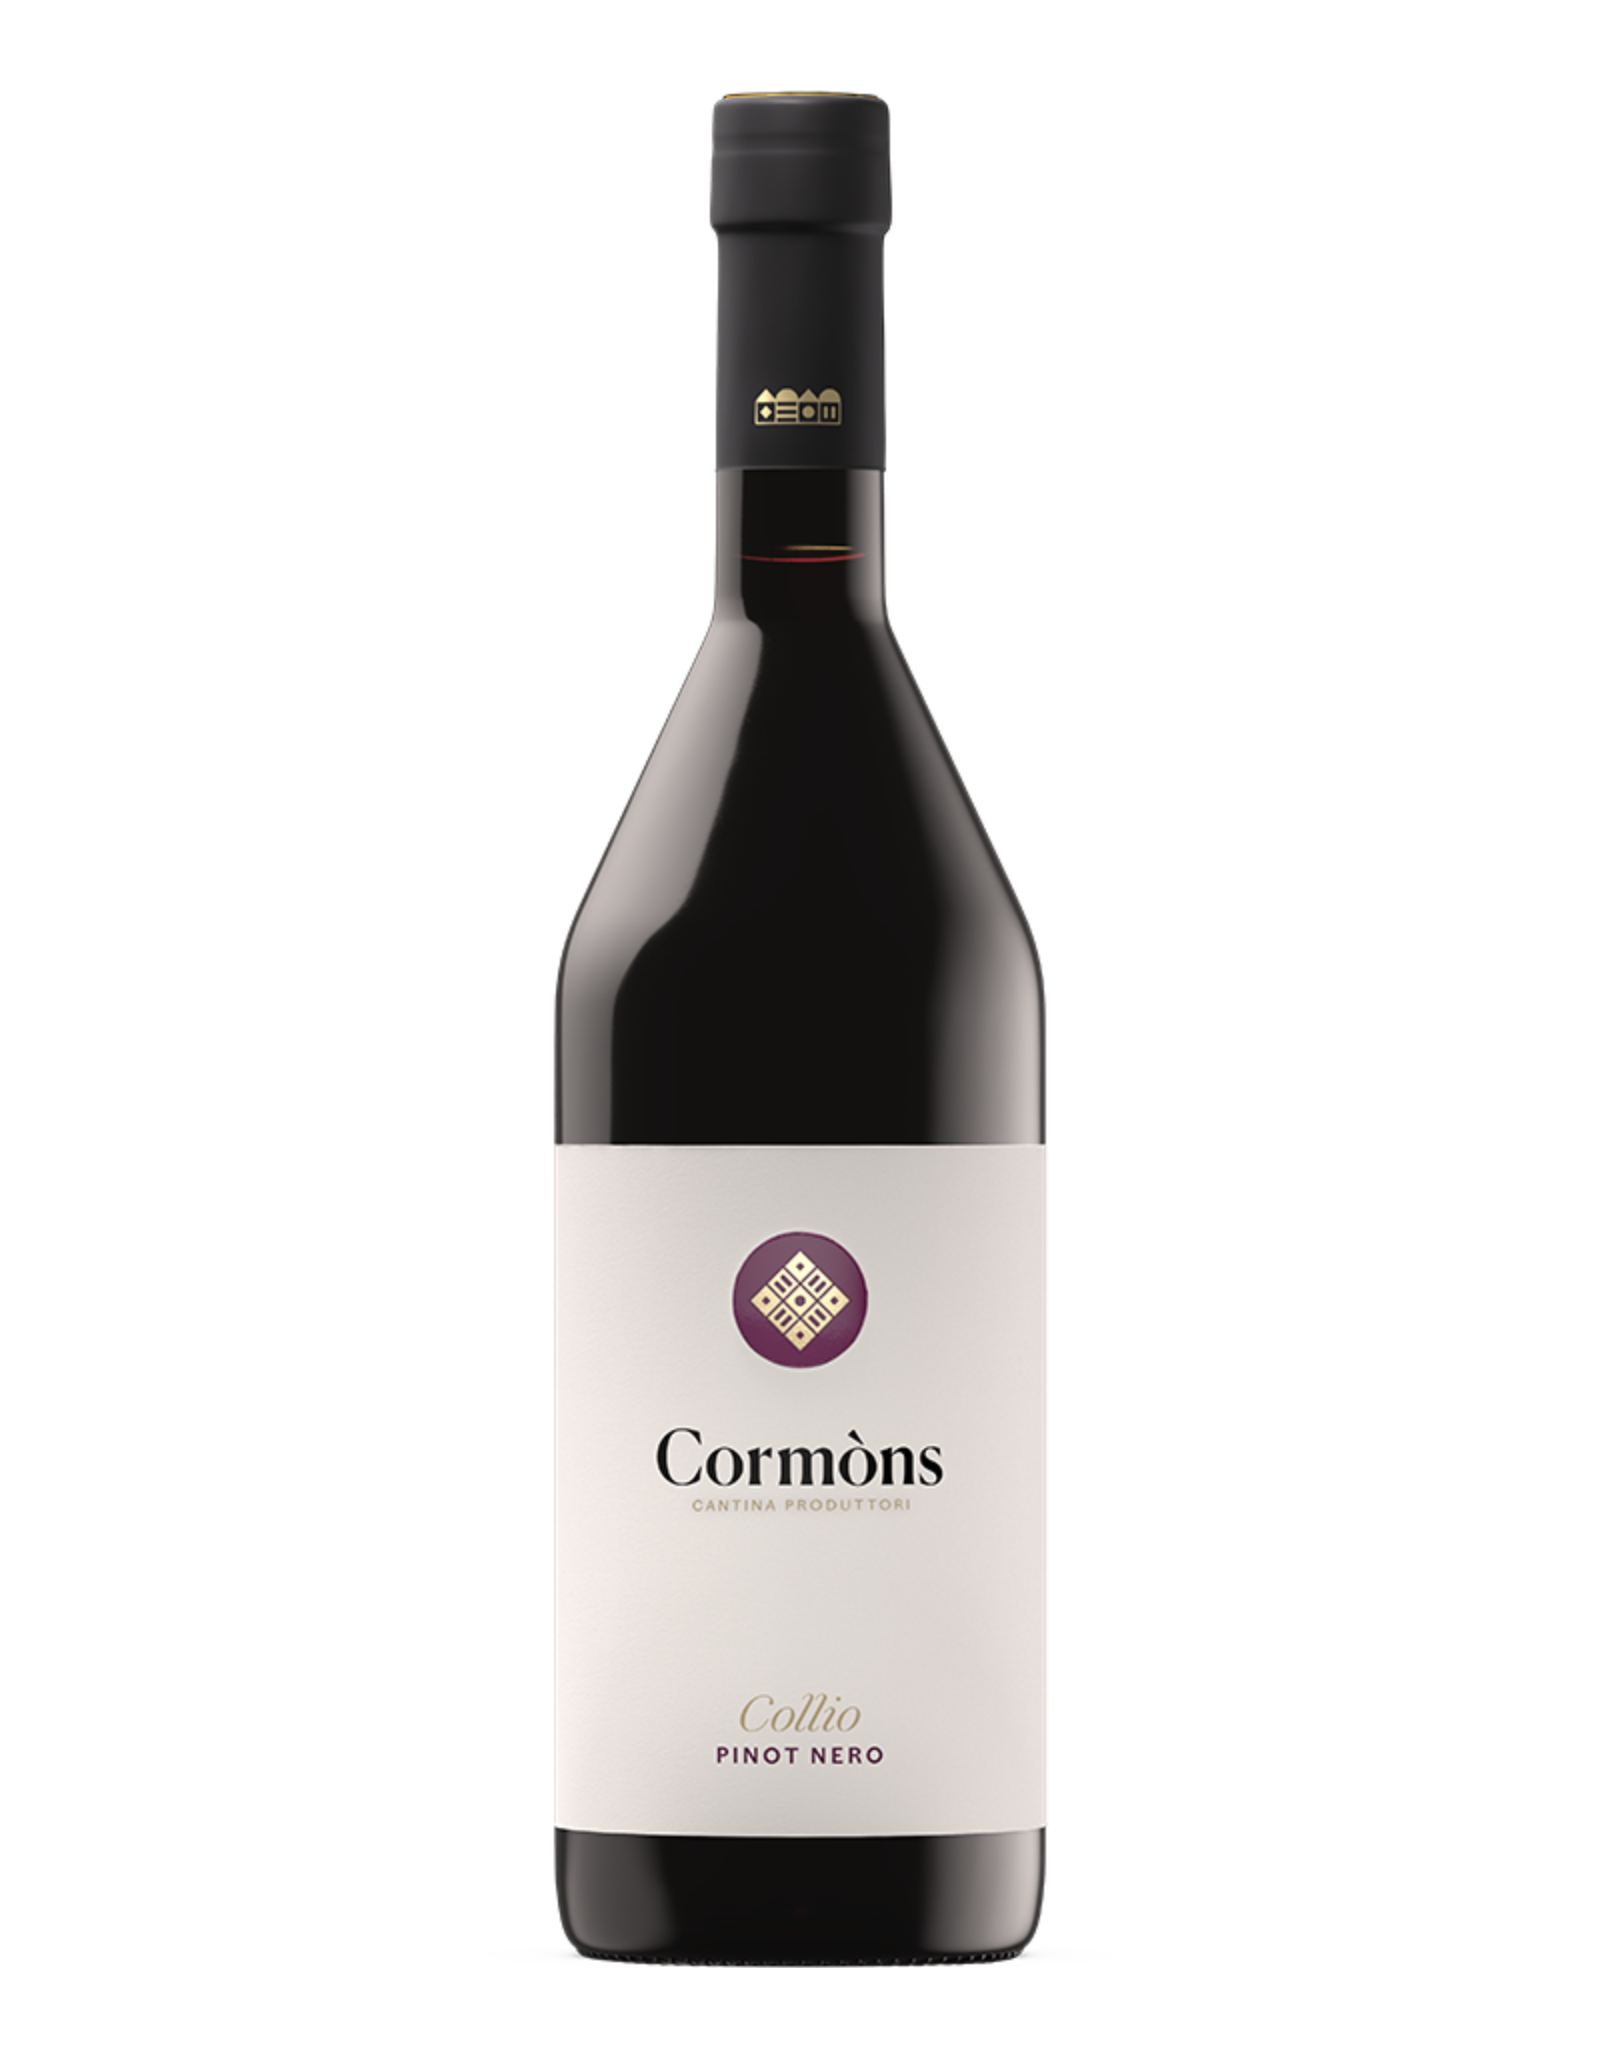 Cormòns Cantina Cormòns DOC Collio Pinot Nero 2020